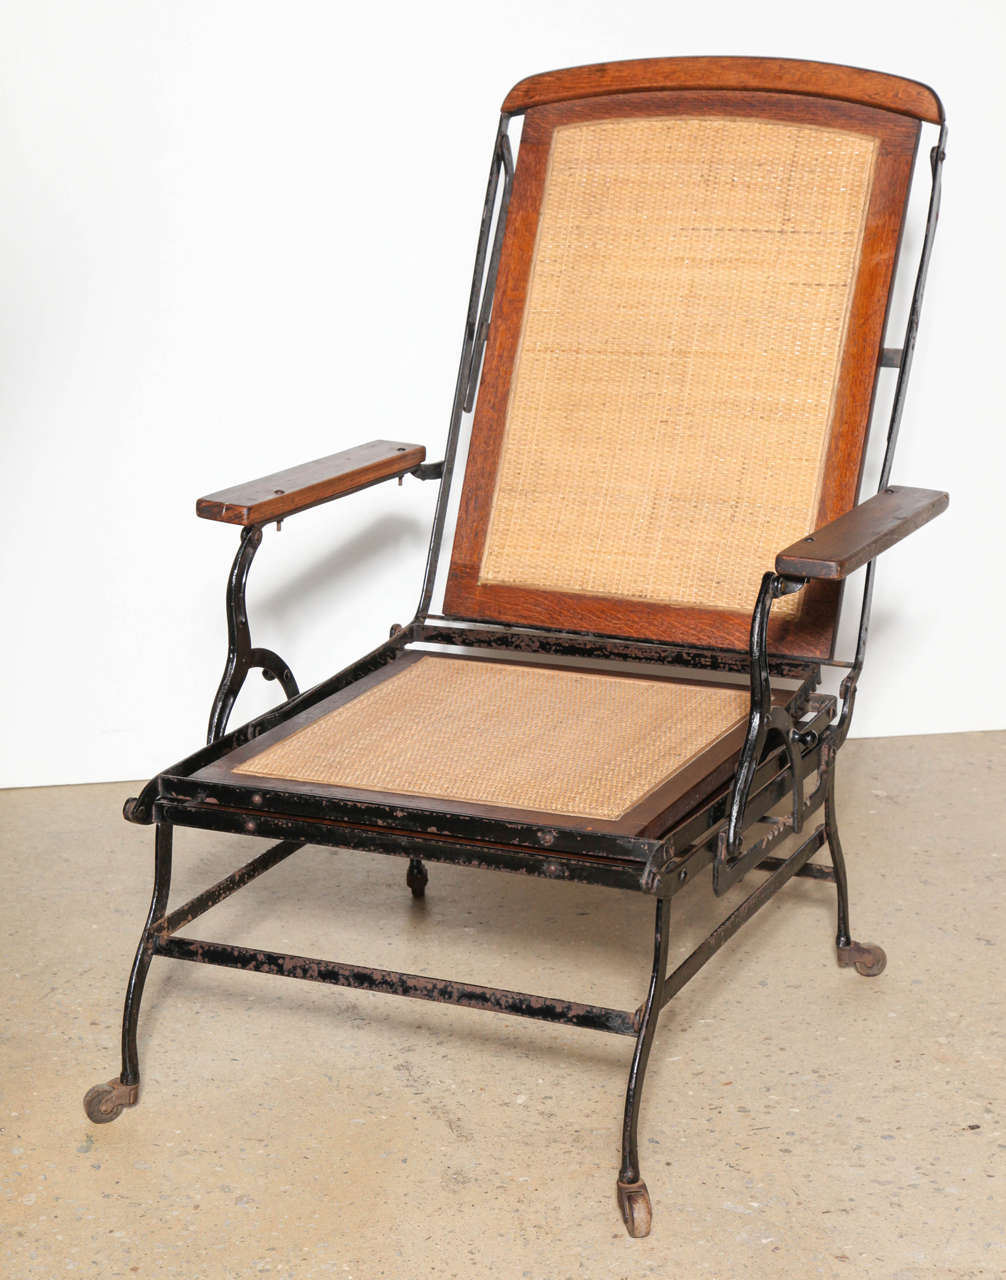 American Cevedra Sheldon Walnut, Cane & Cast Iron Rolling Chaise Lounge Chair, C. 1876